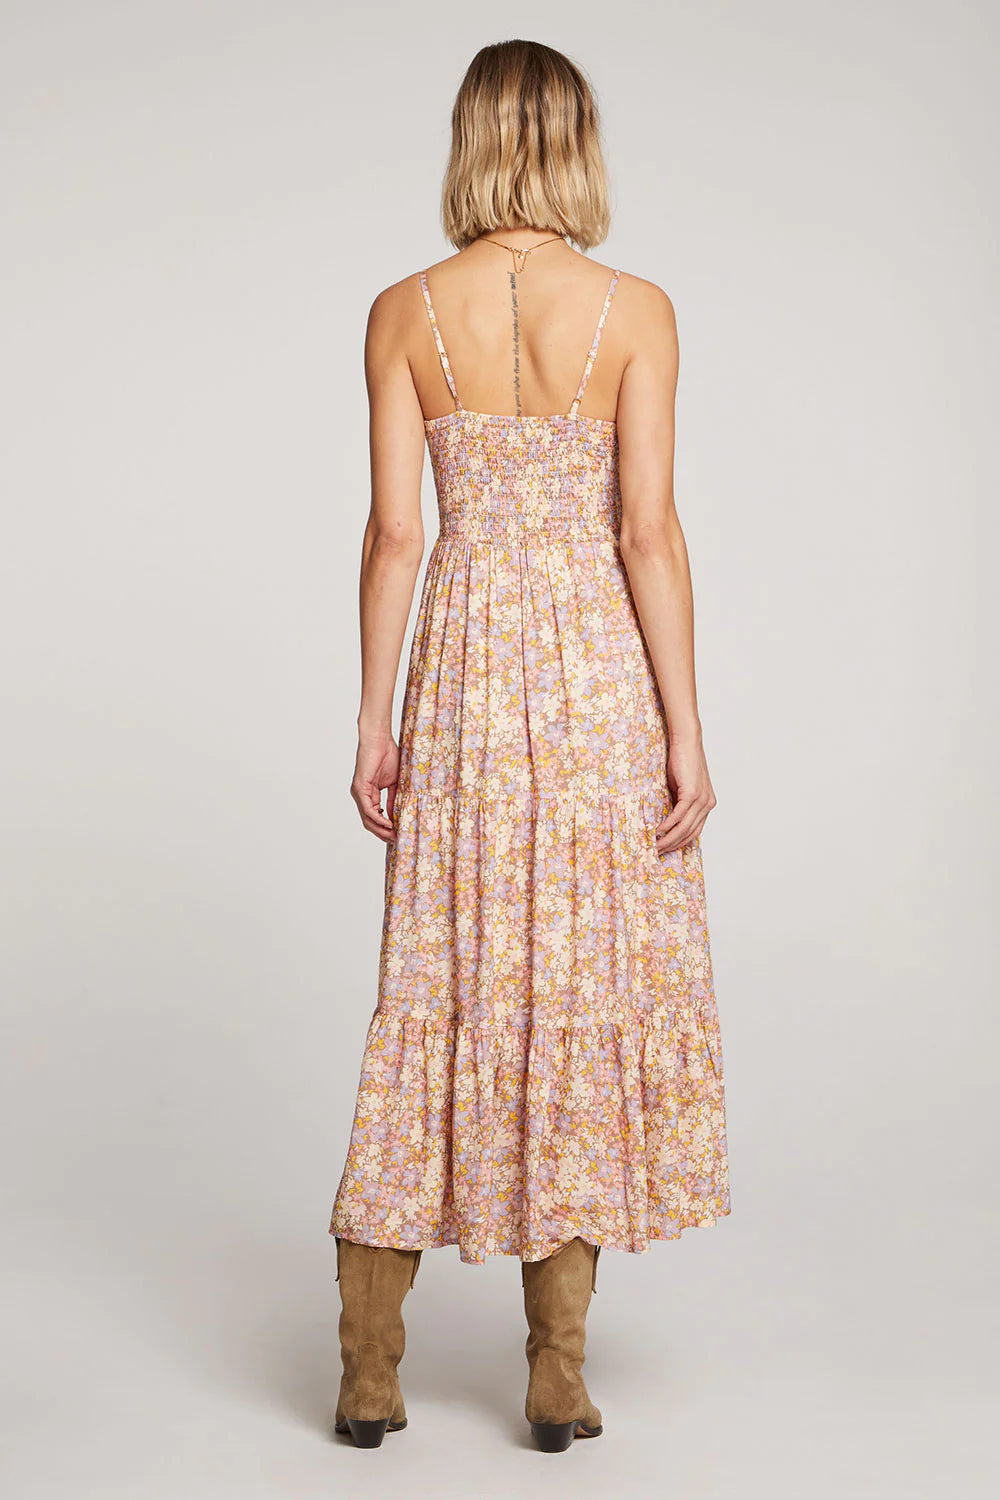 Stein Midi Dress by Saltwater Luxe